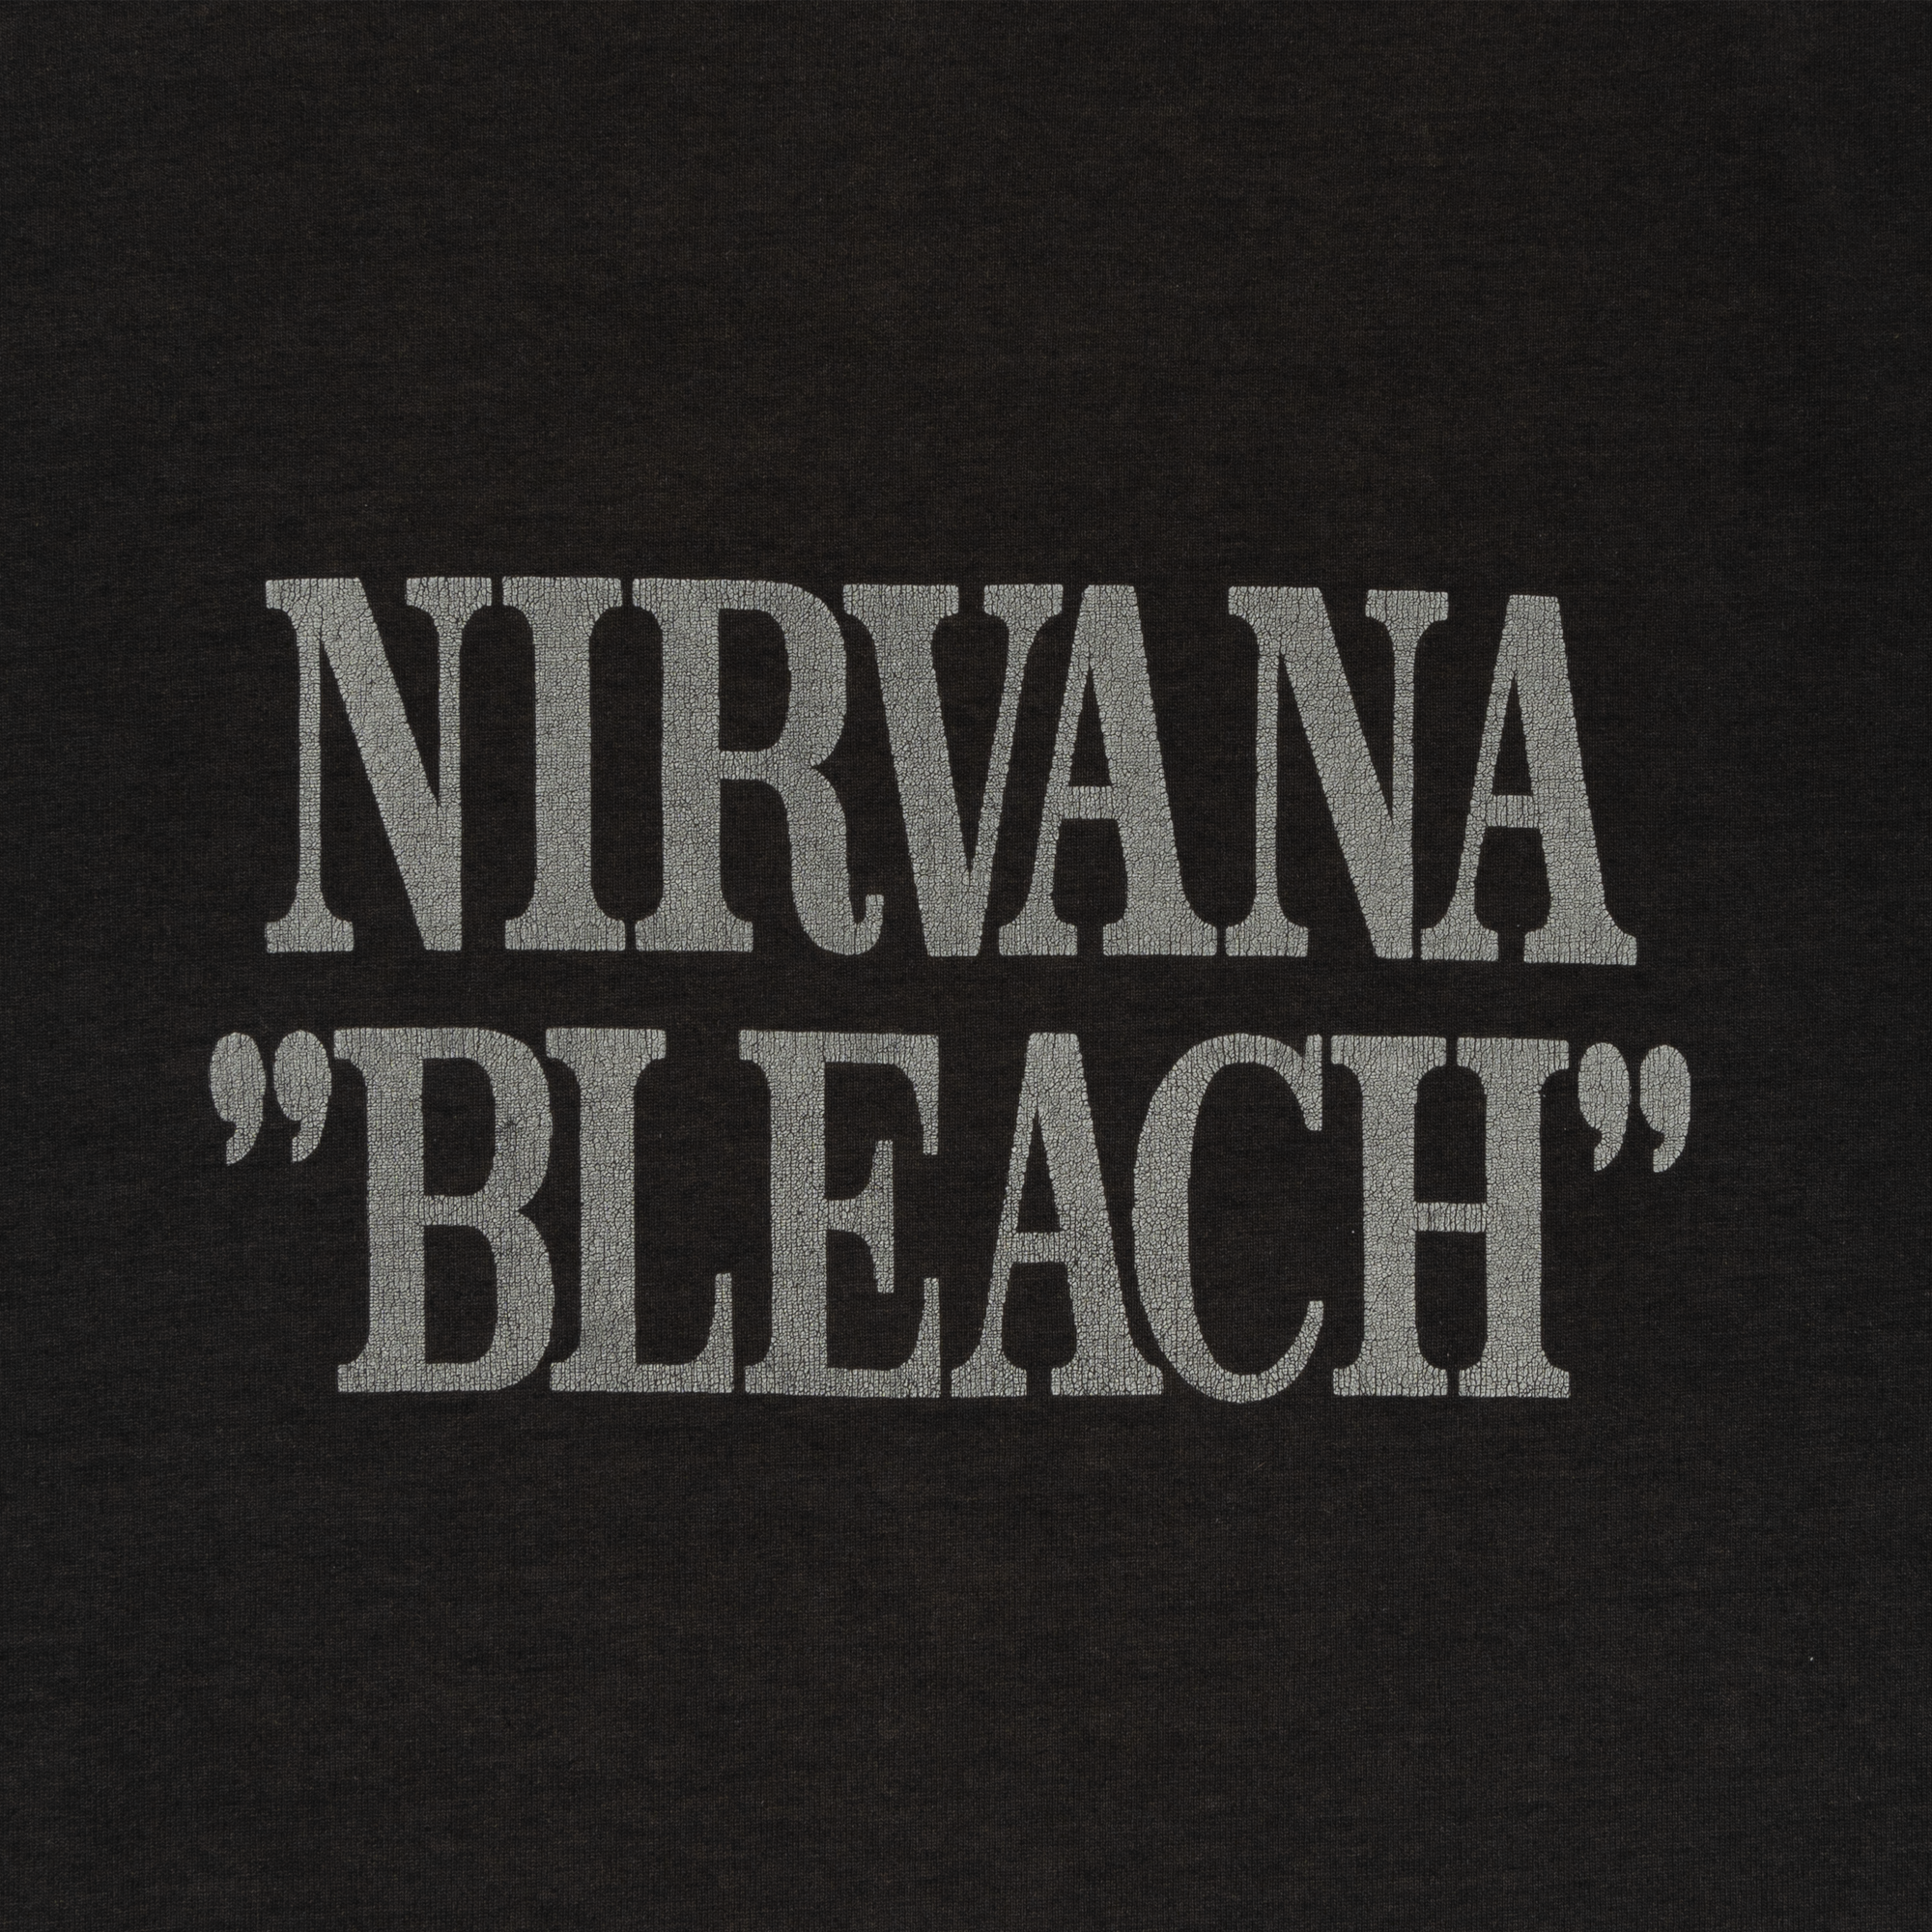 Nirvana "Bleach" Kurt Cobain Tee Faded Black-PLUS